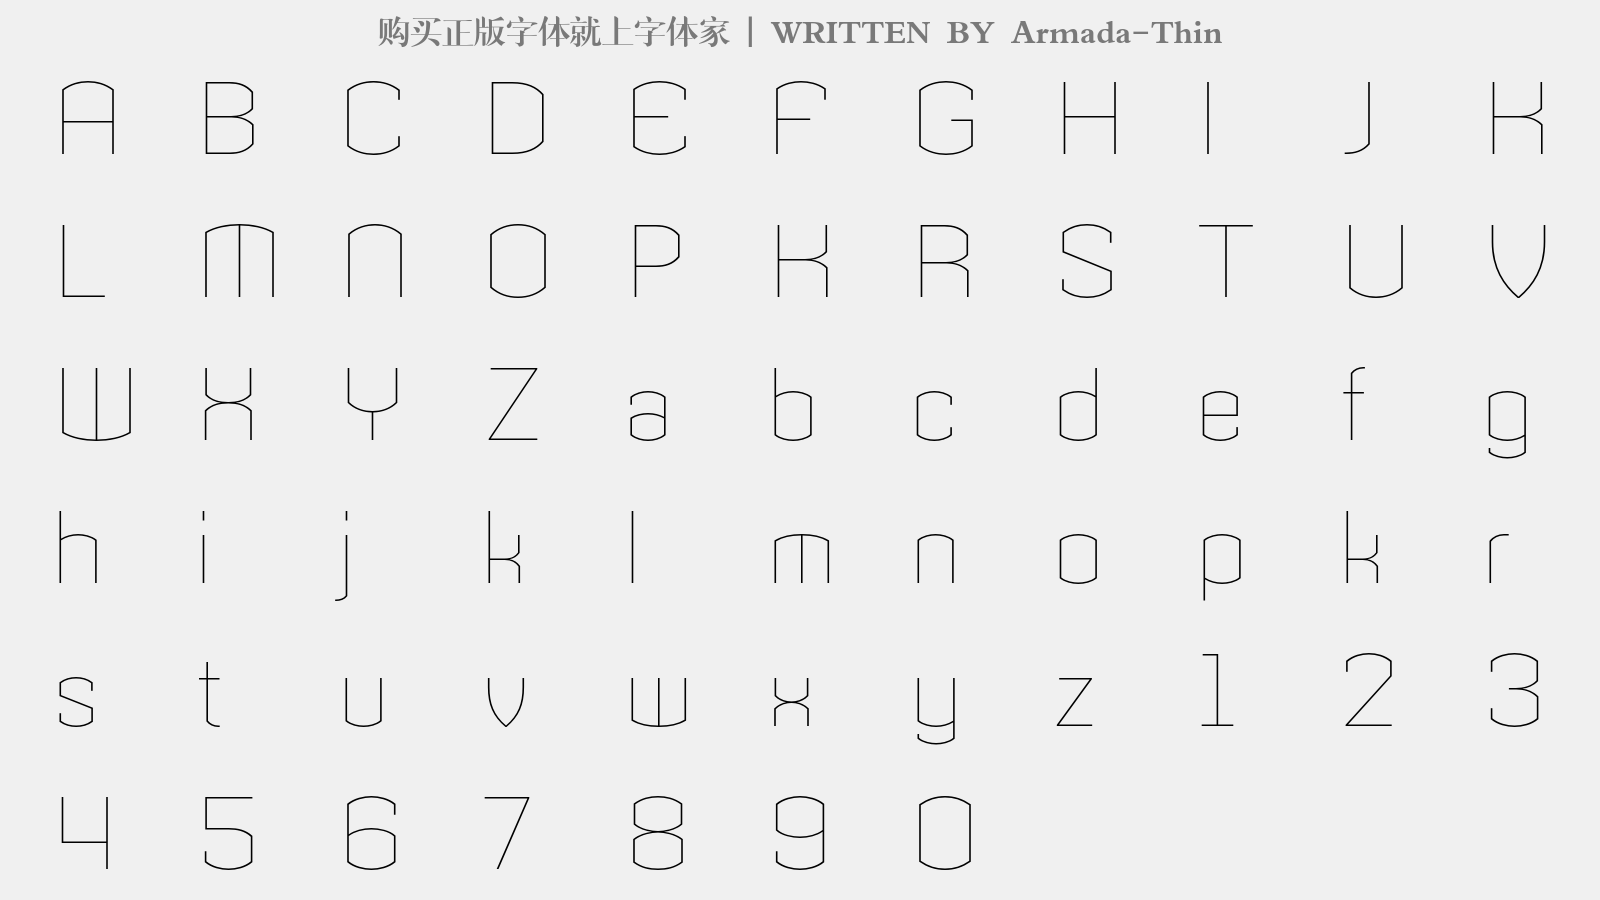 Armada-Thin - 大写字母/小写字母/数字